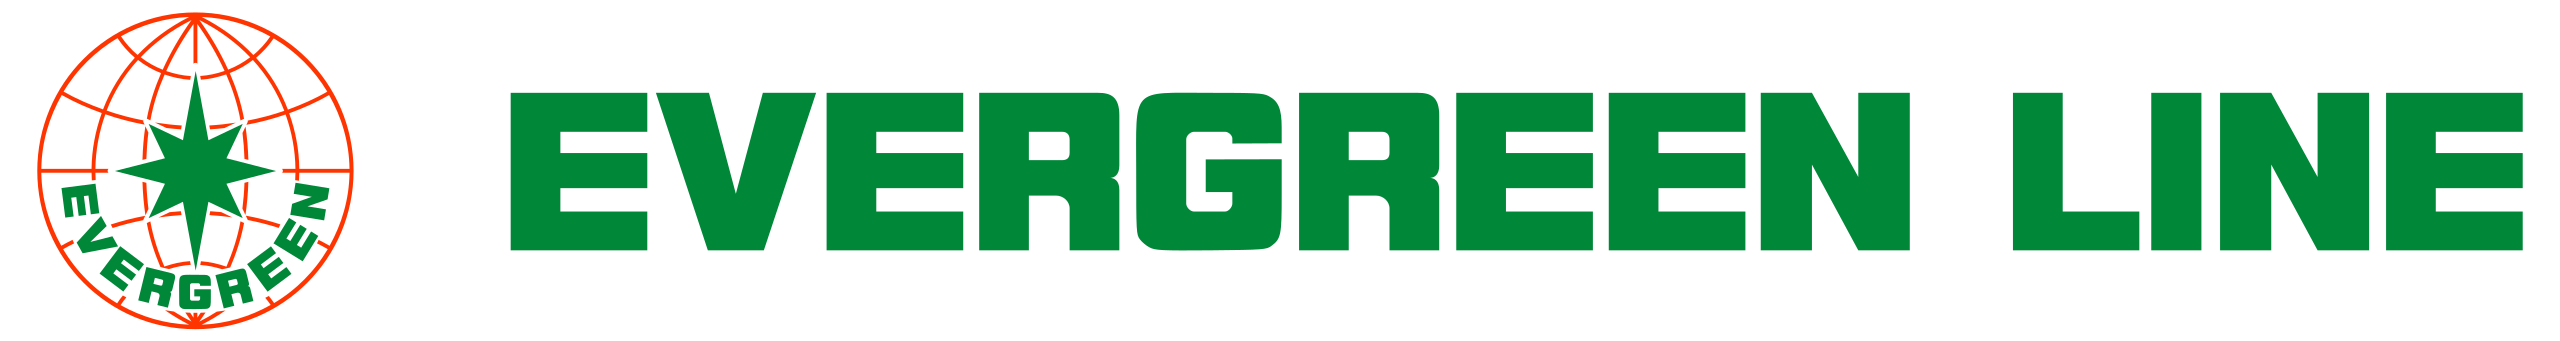 File:Evergreen Line Logo.svg - Wikimedia Commons